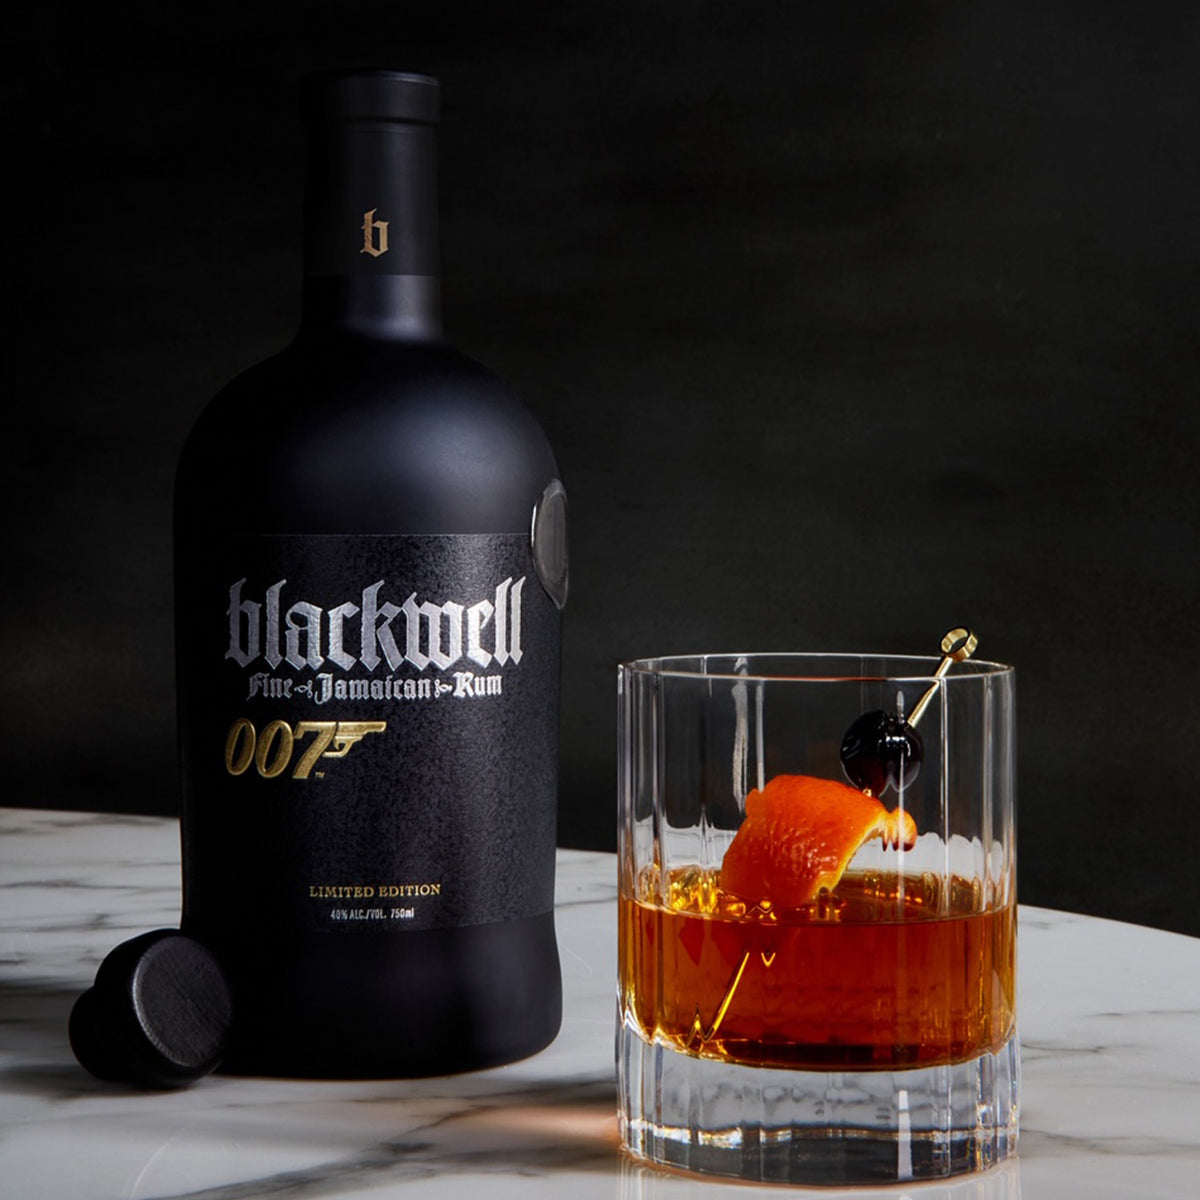 James Bond 007 Jamaican Rum - By Blackwell Rum (70cl)